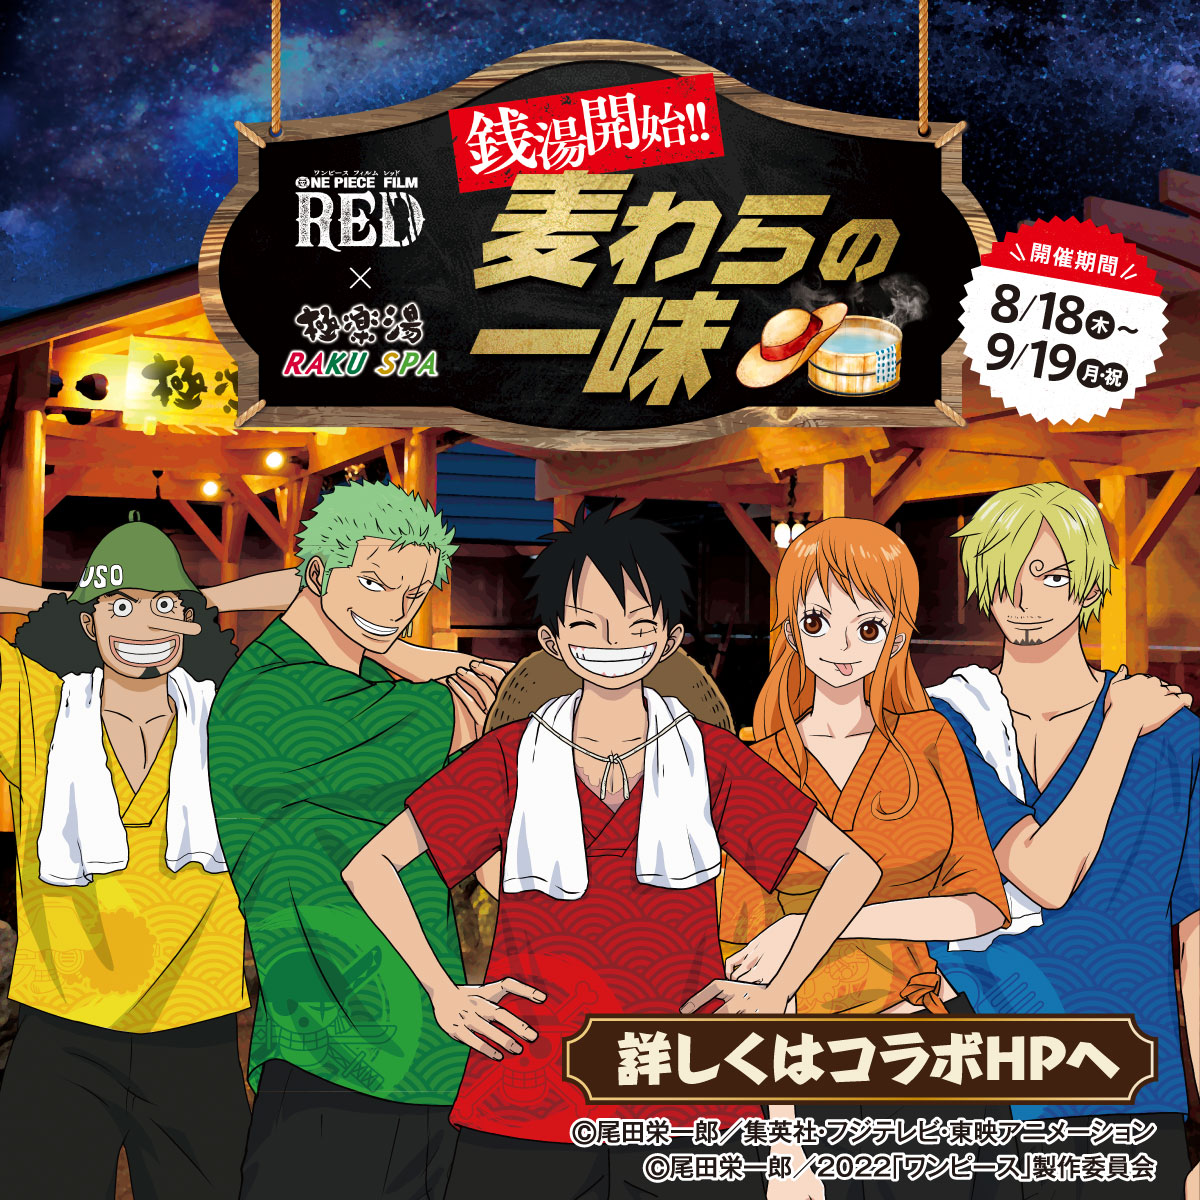 One Piece Film Red コラボキャンペーン開催のお知らせ 8 18 木 9 19 月 祝 祥楽の湯 一宮店